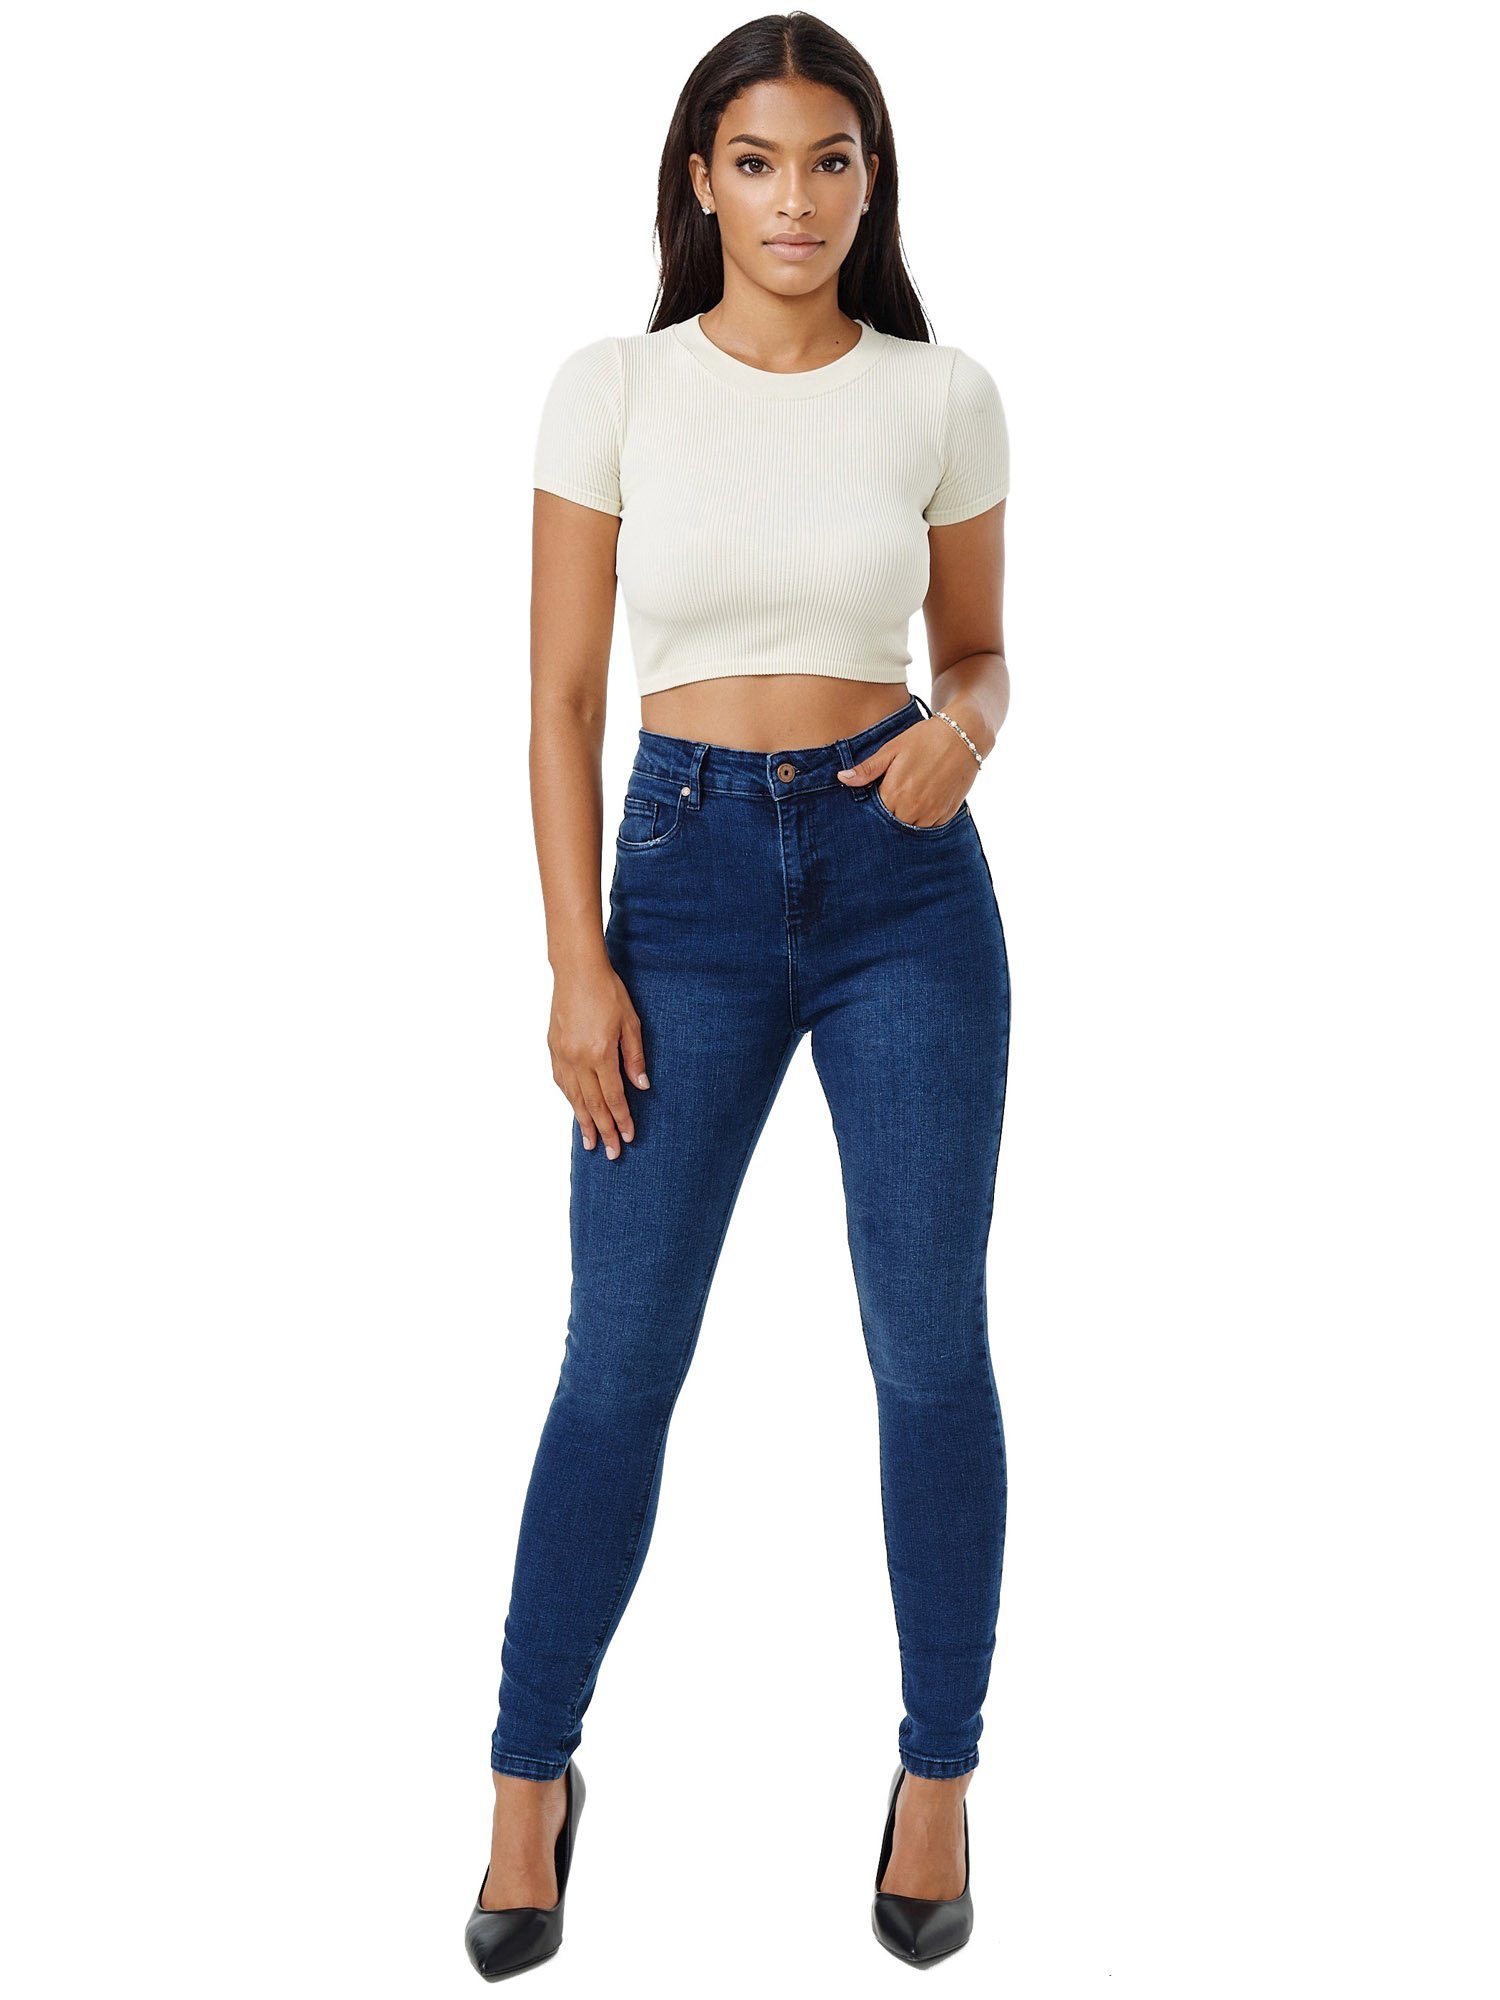 Tazzio Damen dunkelblau Skinny Fit High-waist-Jeans F101 Jeanshose